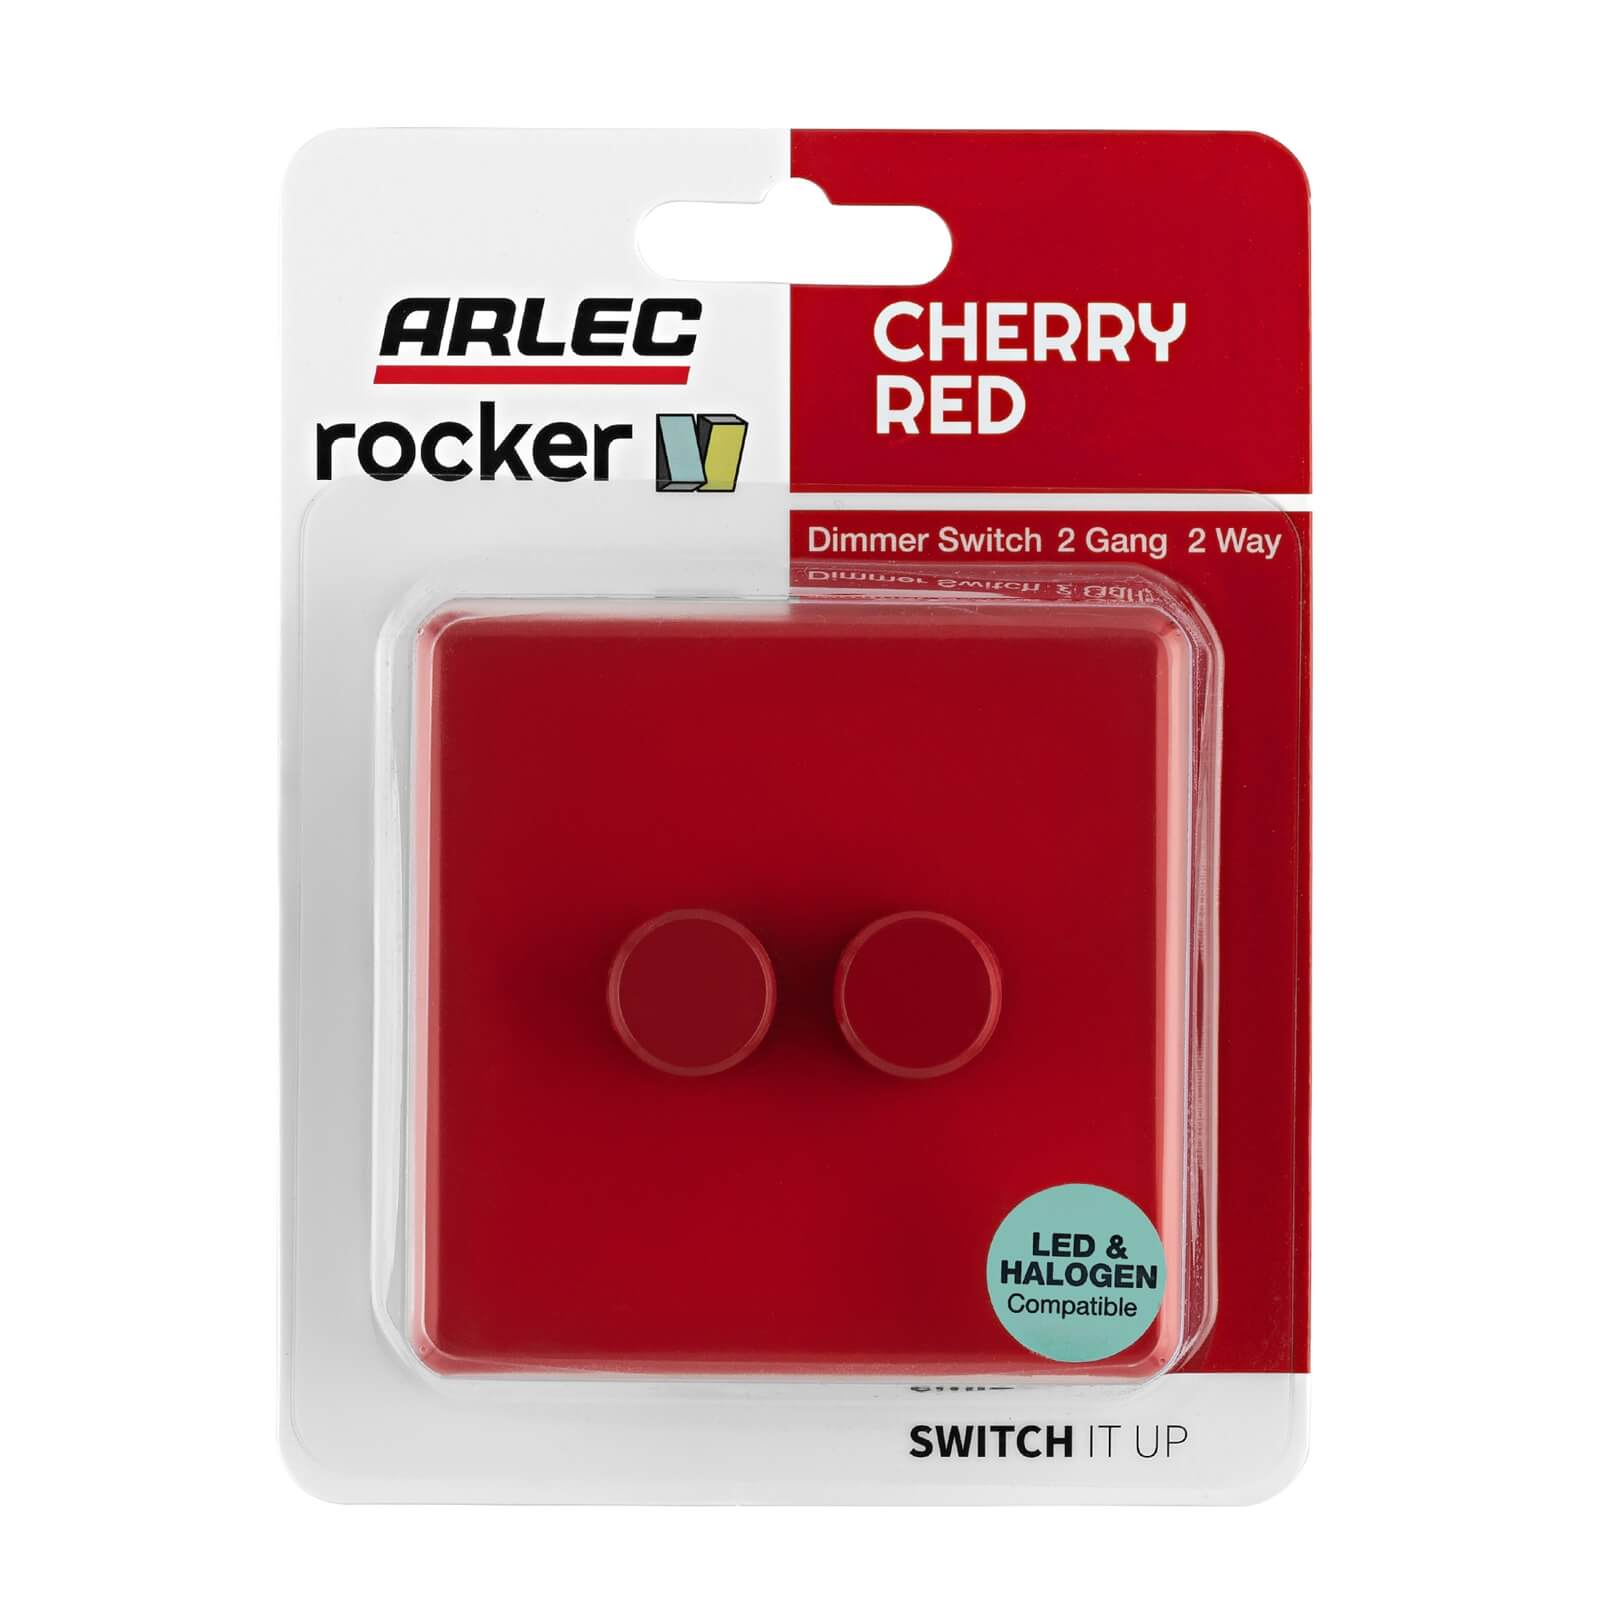 Arlec Rocker 2 Gang 2 Way Cherry Red Dimmer switch